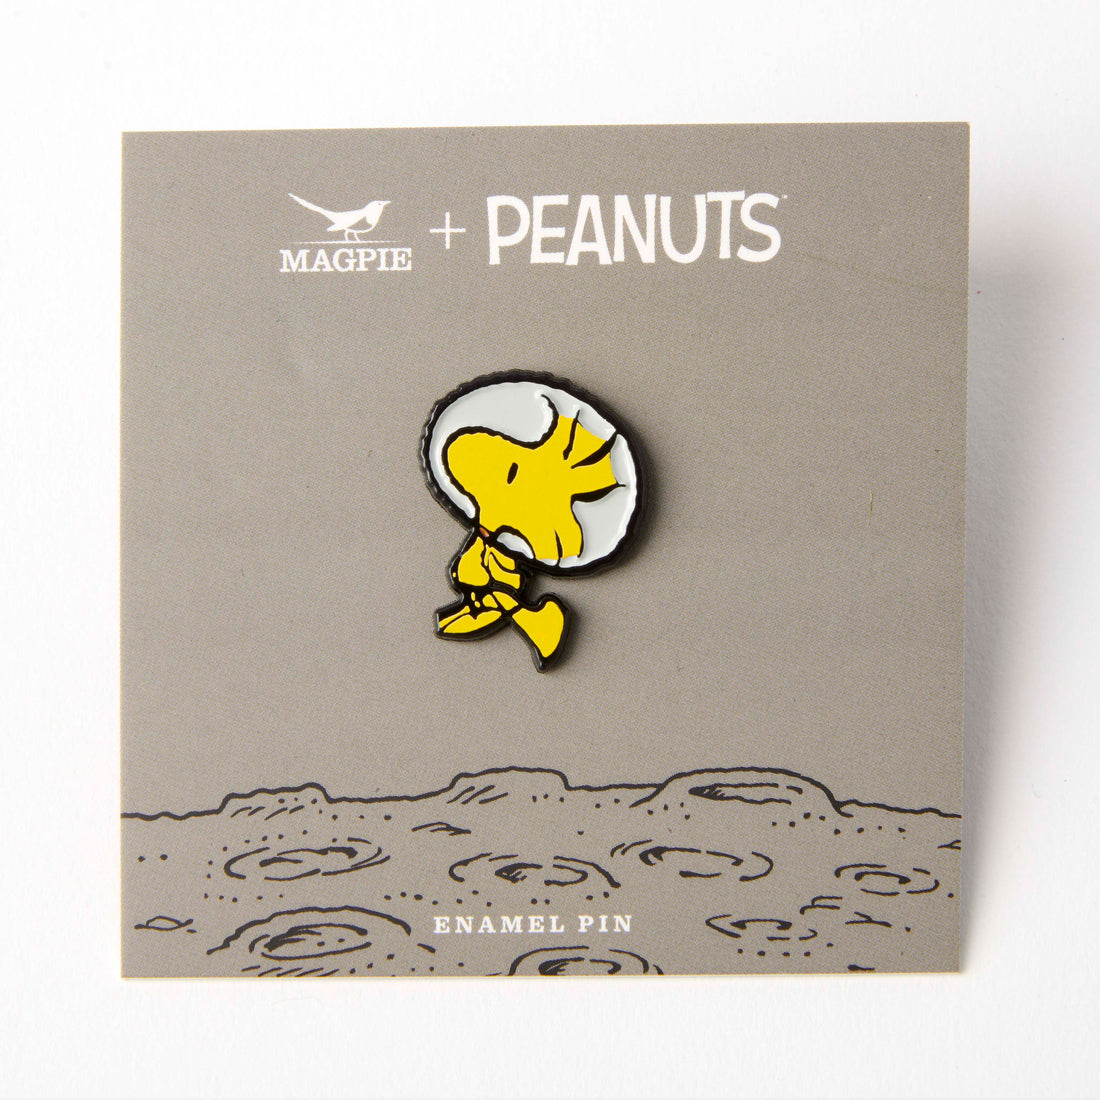 Peanuts Space Enamel Pin - Woodstock